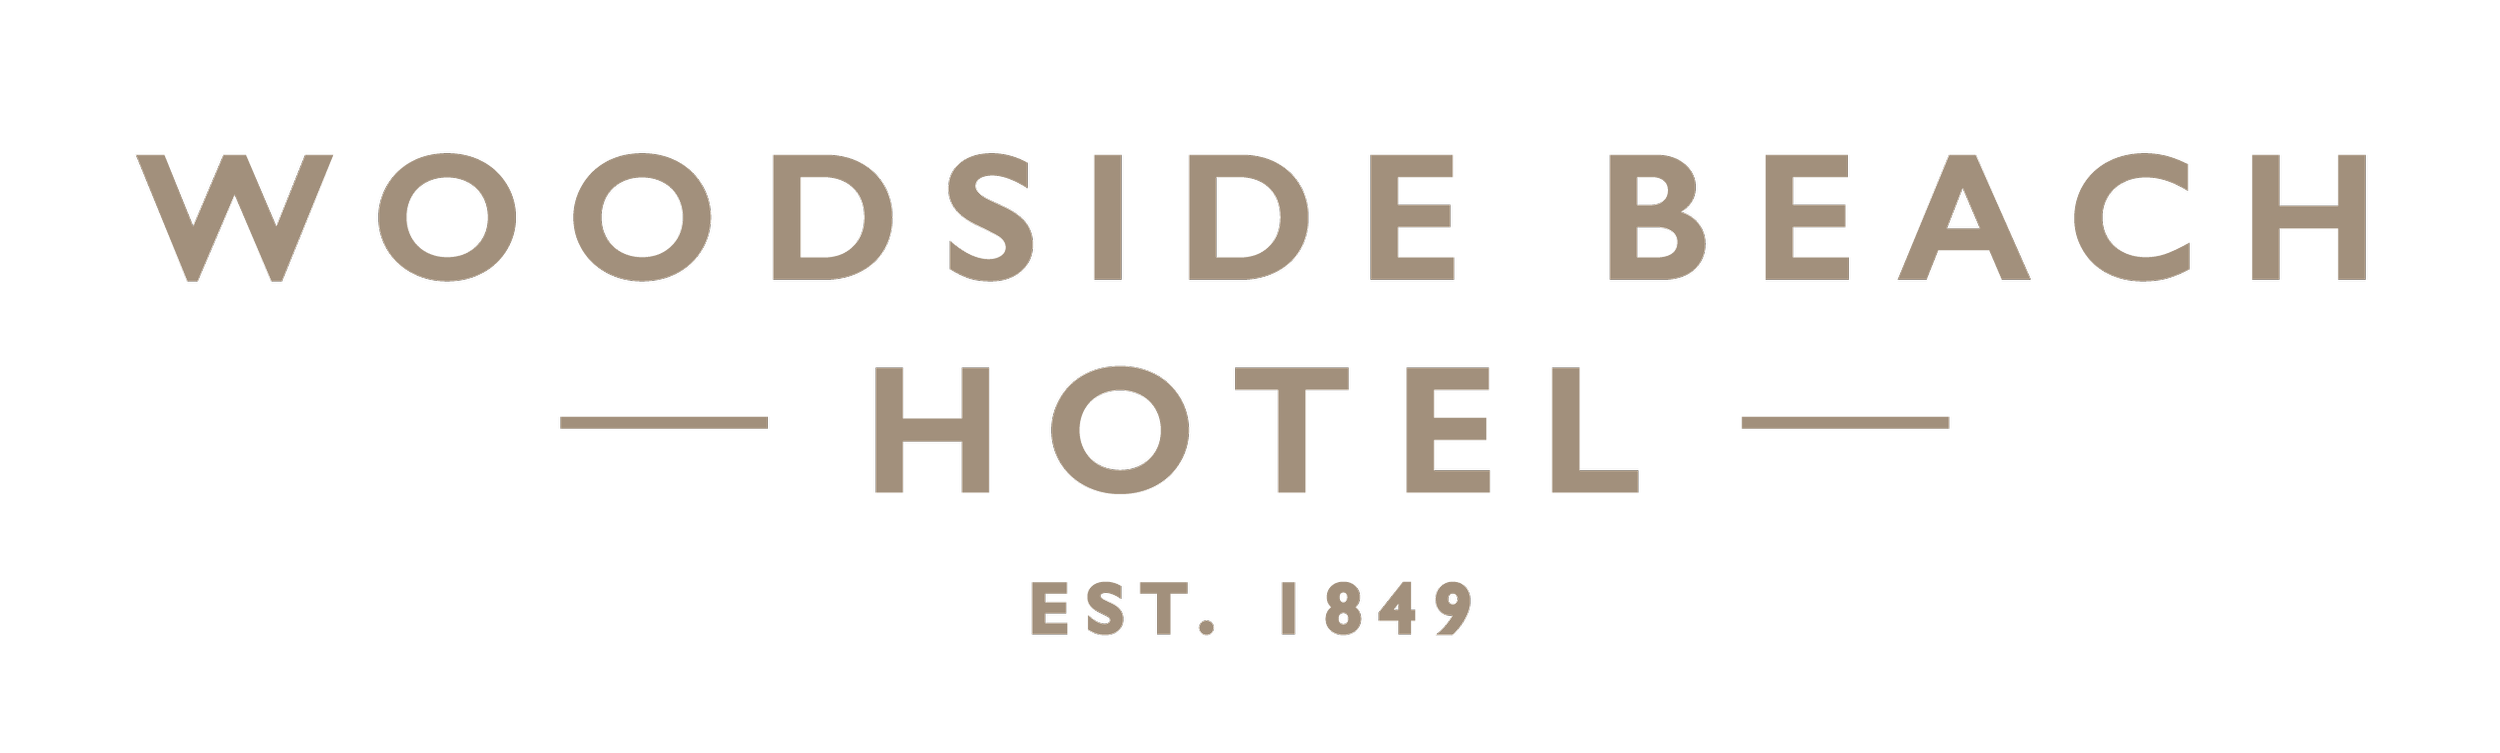 Woodside Beach Hotel